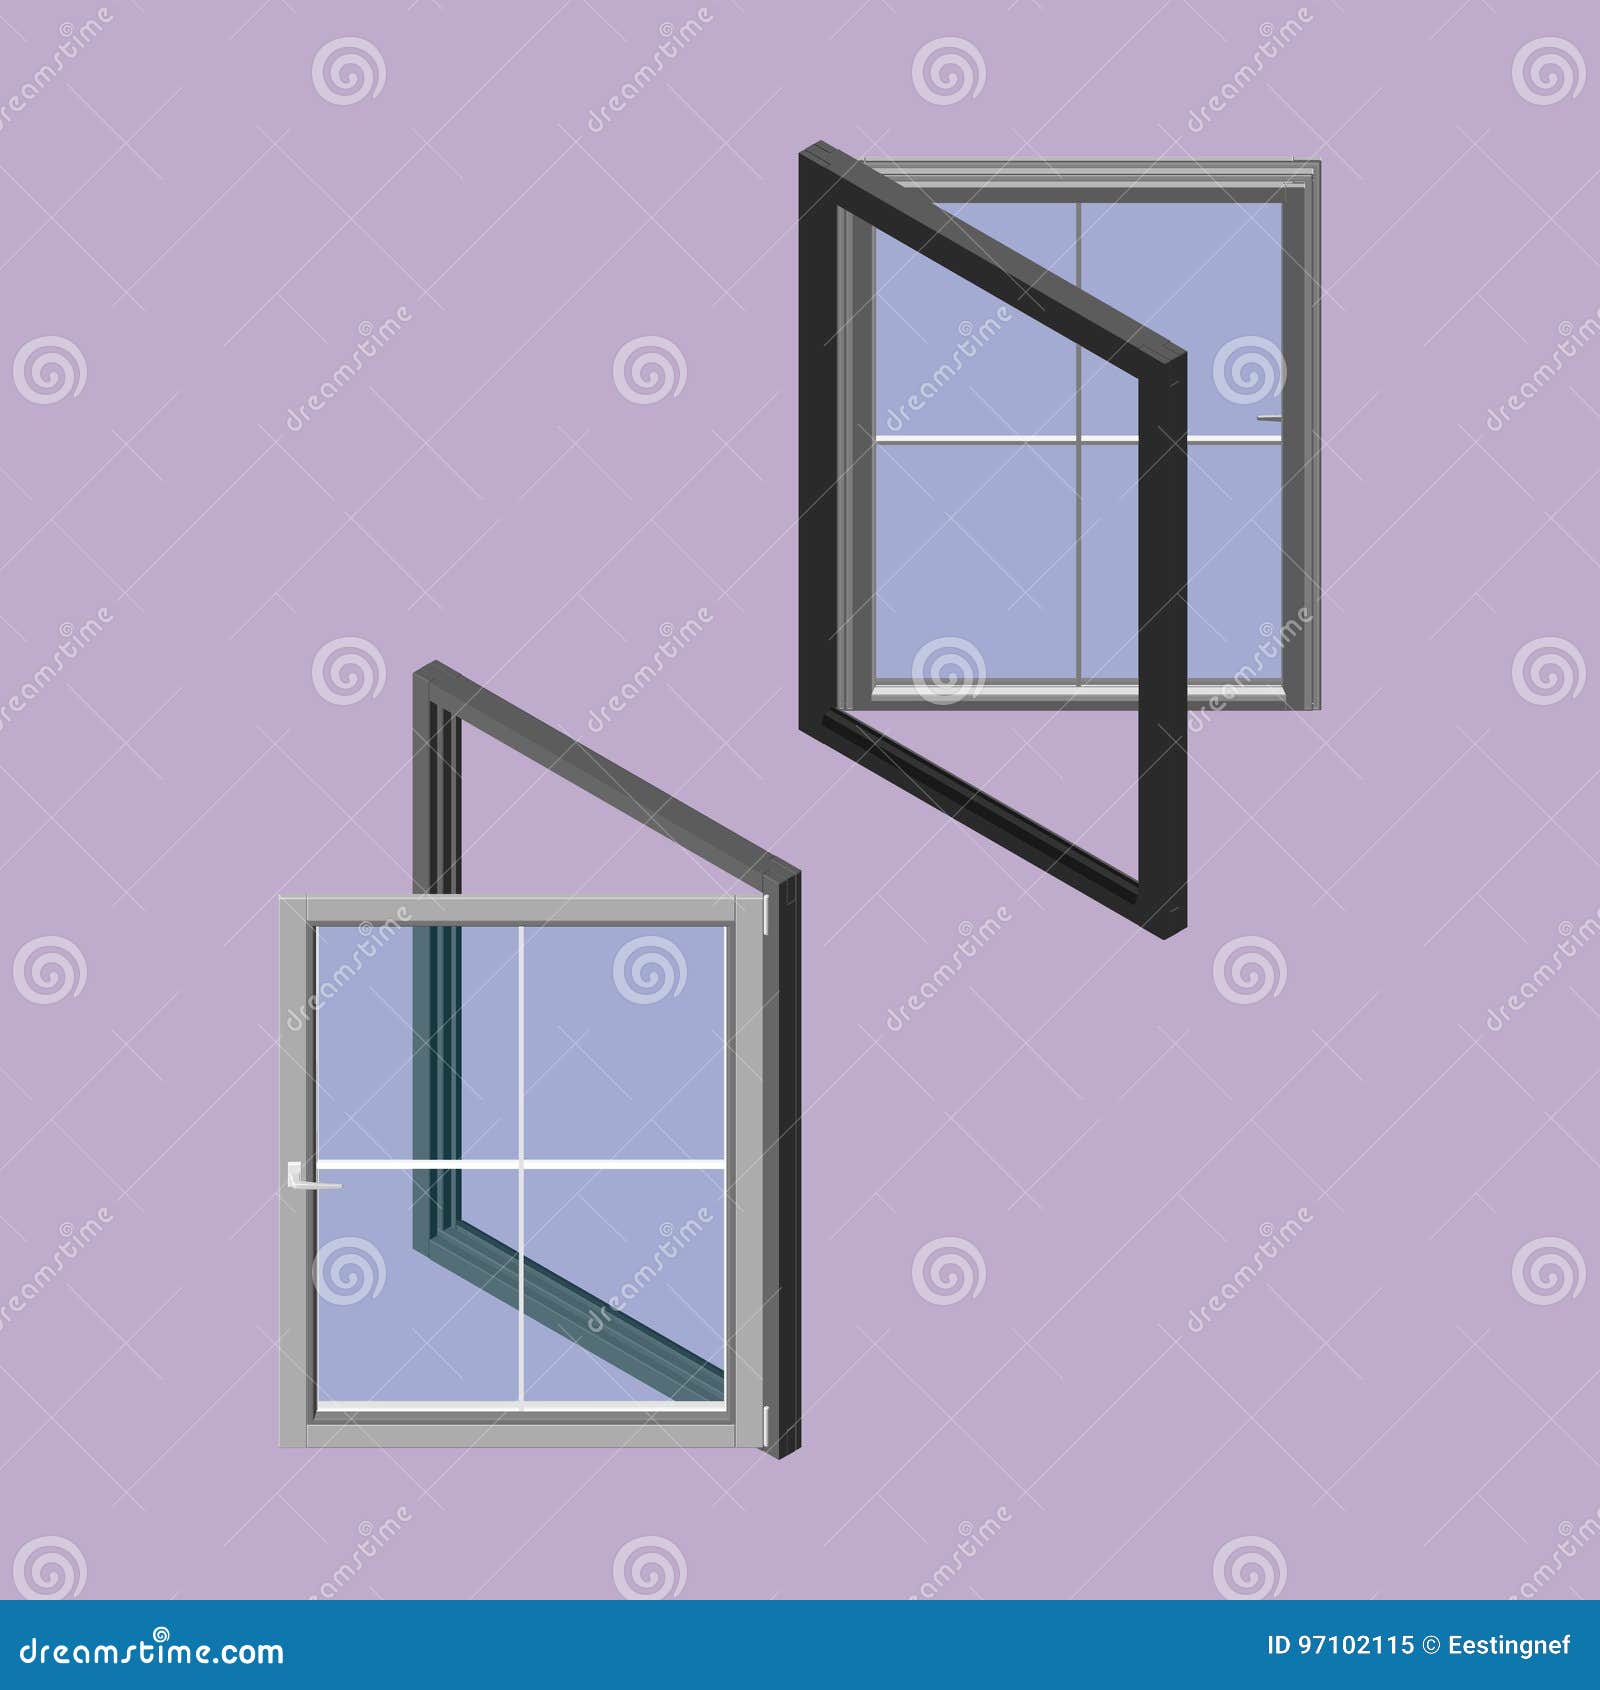 Window wood pane as 3d illustration free image download